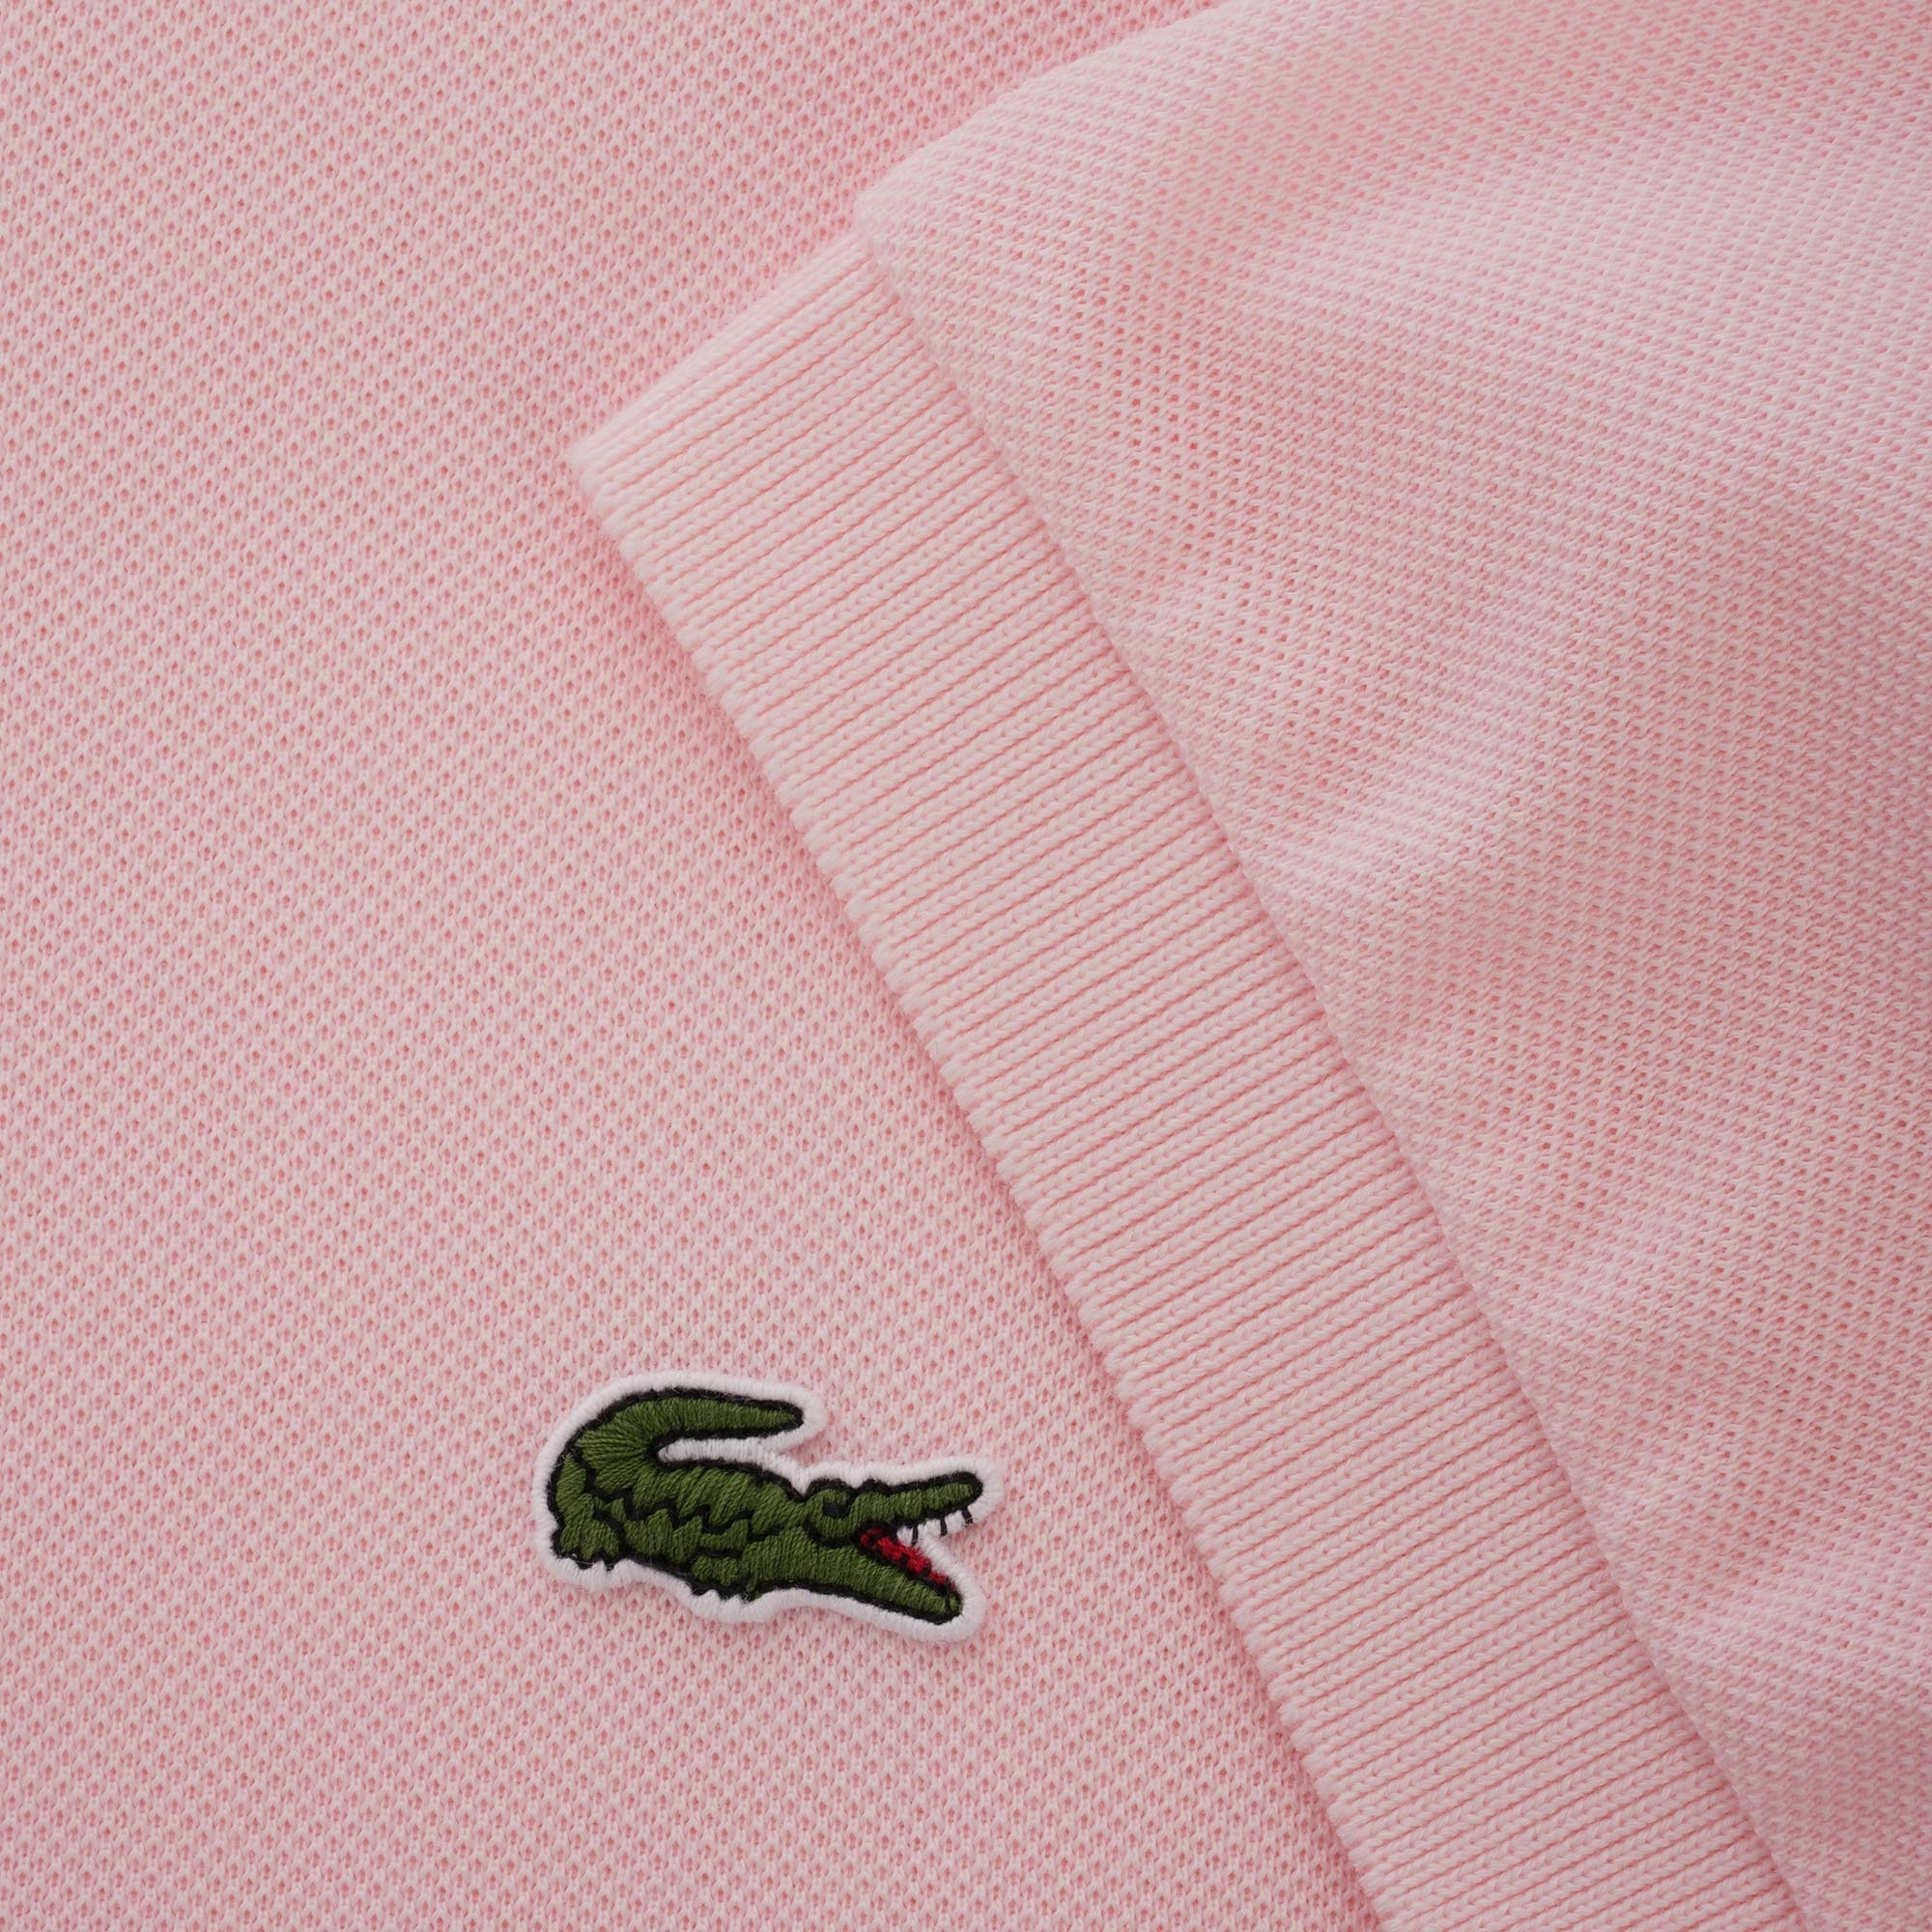 Lacoste Classic Pique Polo Shirt Flamingo